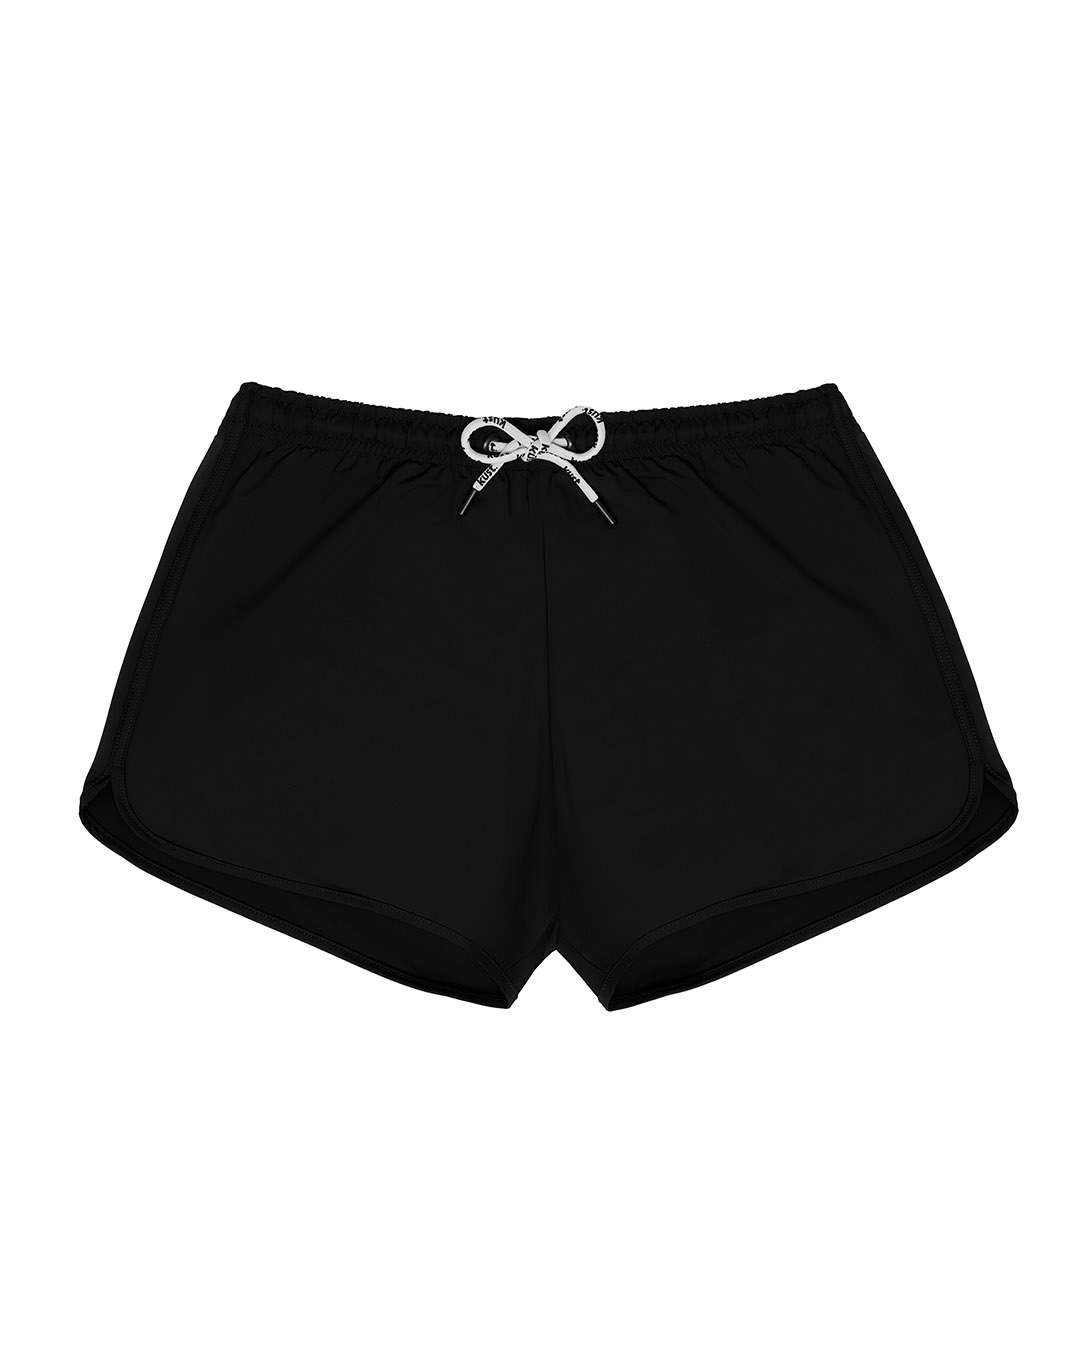 Swim black shorts.- KUST.SWIM SHORTS 01/ BLACK - kust.